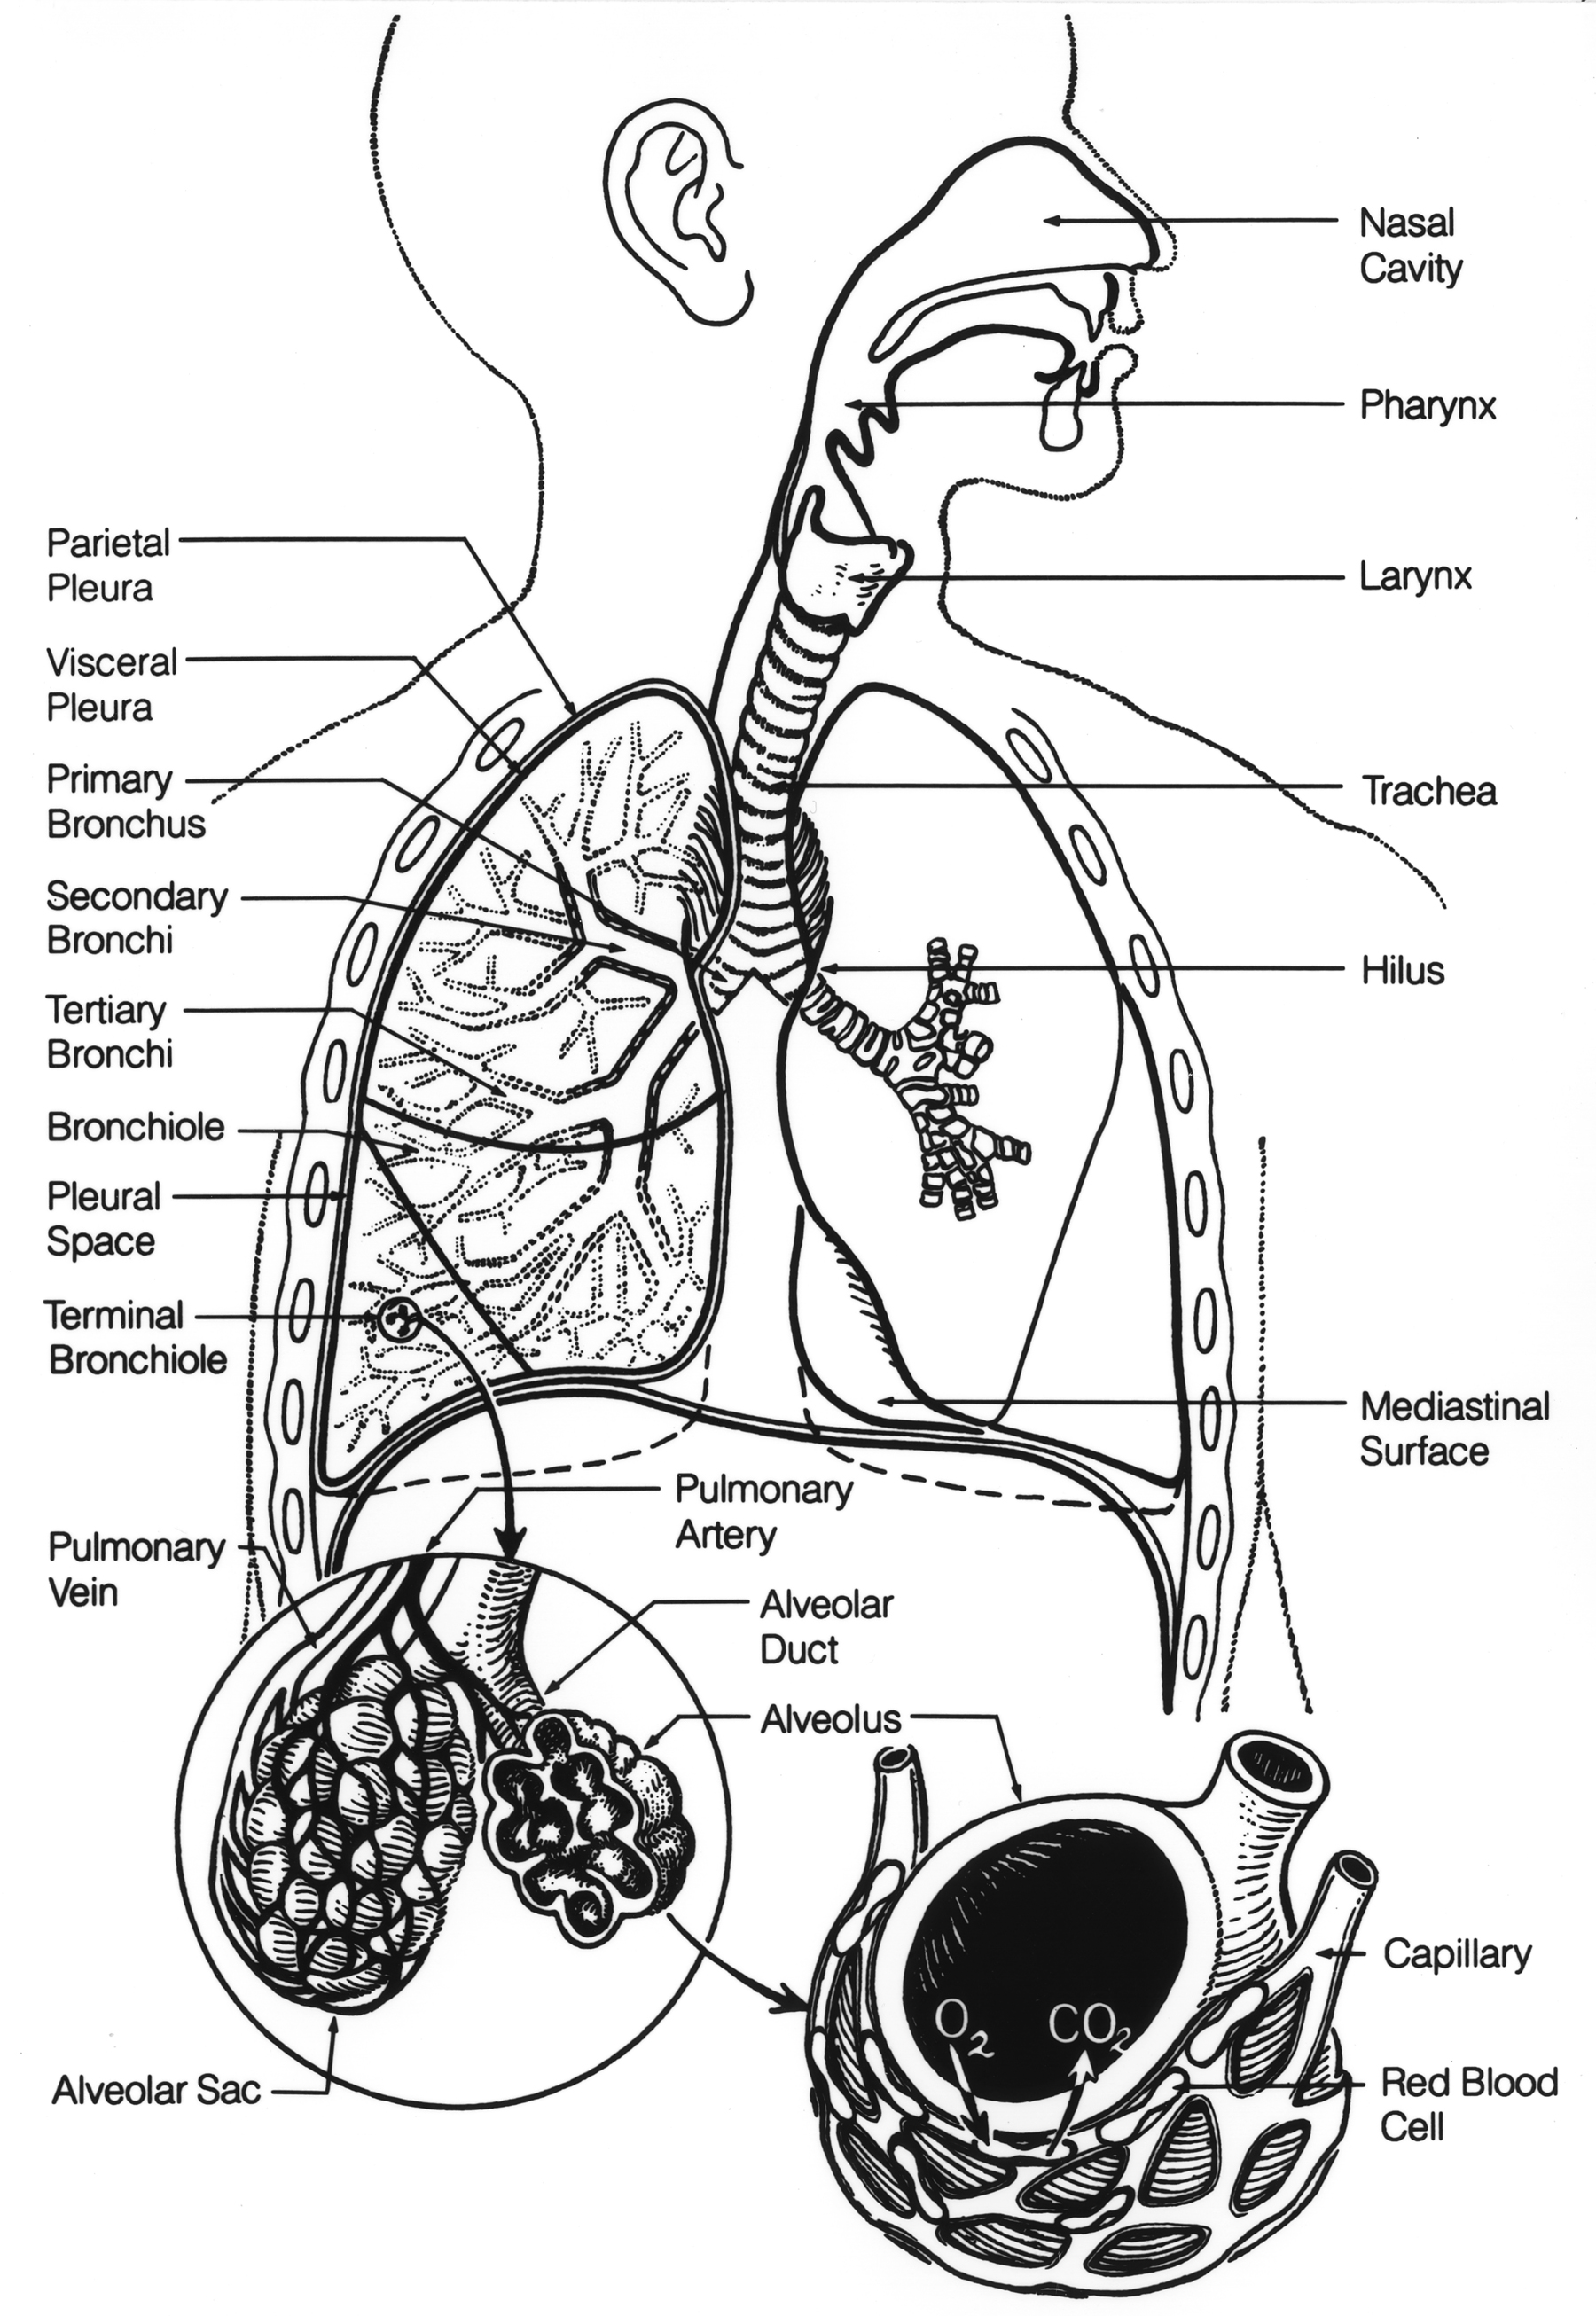 Respiratory System Image Details Nci Visuals Online